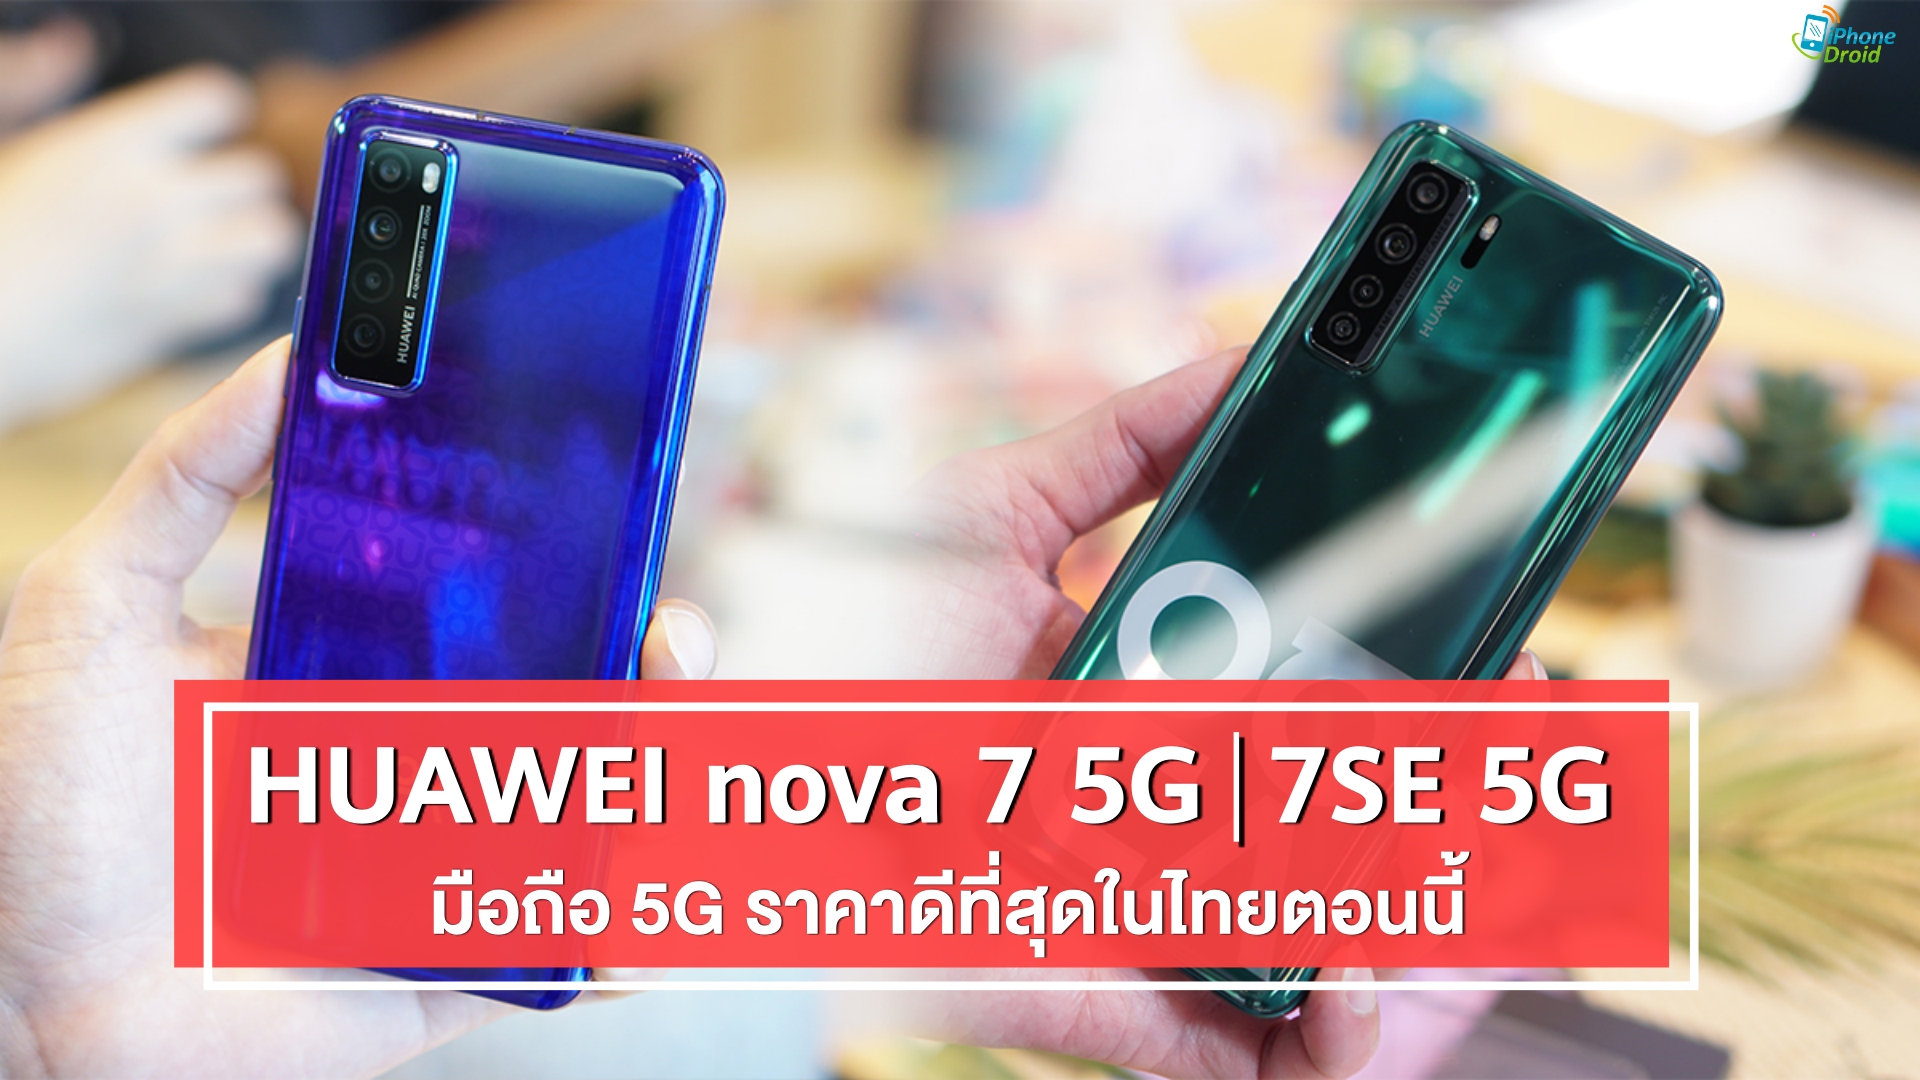 HUAEWI nova 7 5G and HUAWEI nova 7SE 5G Preview